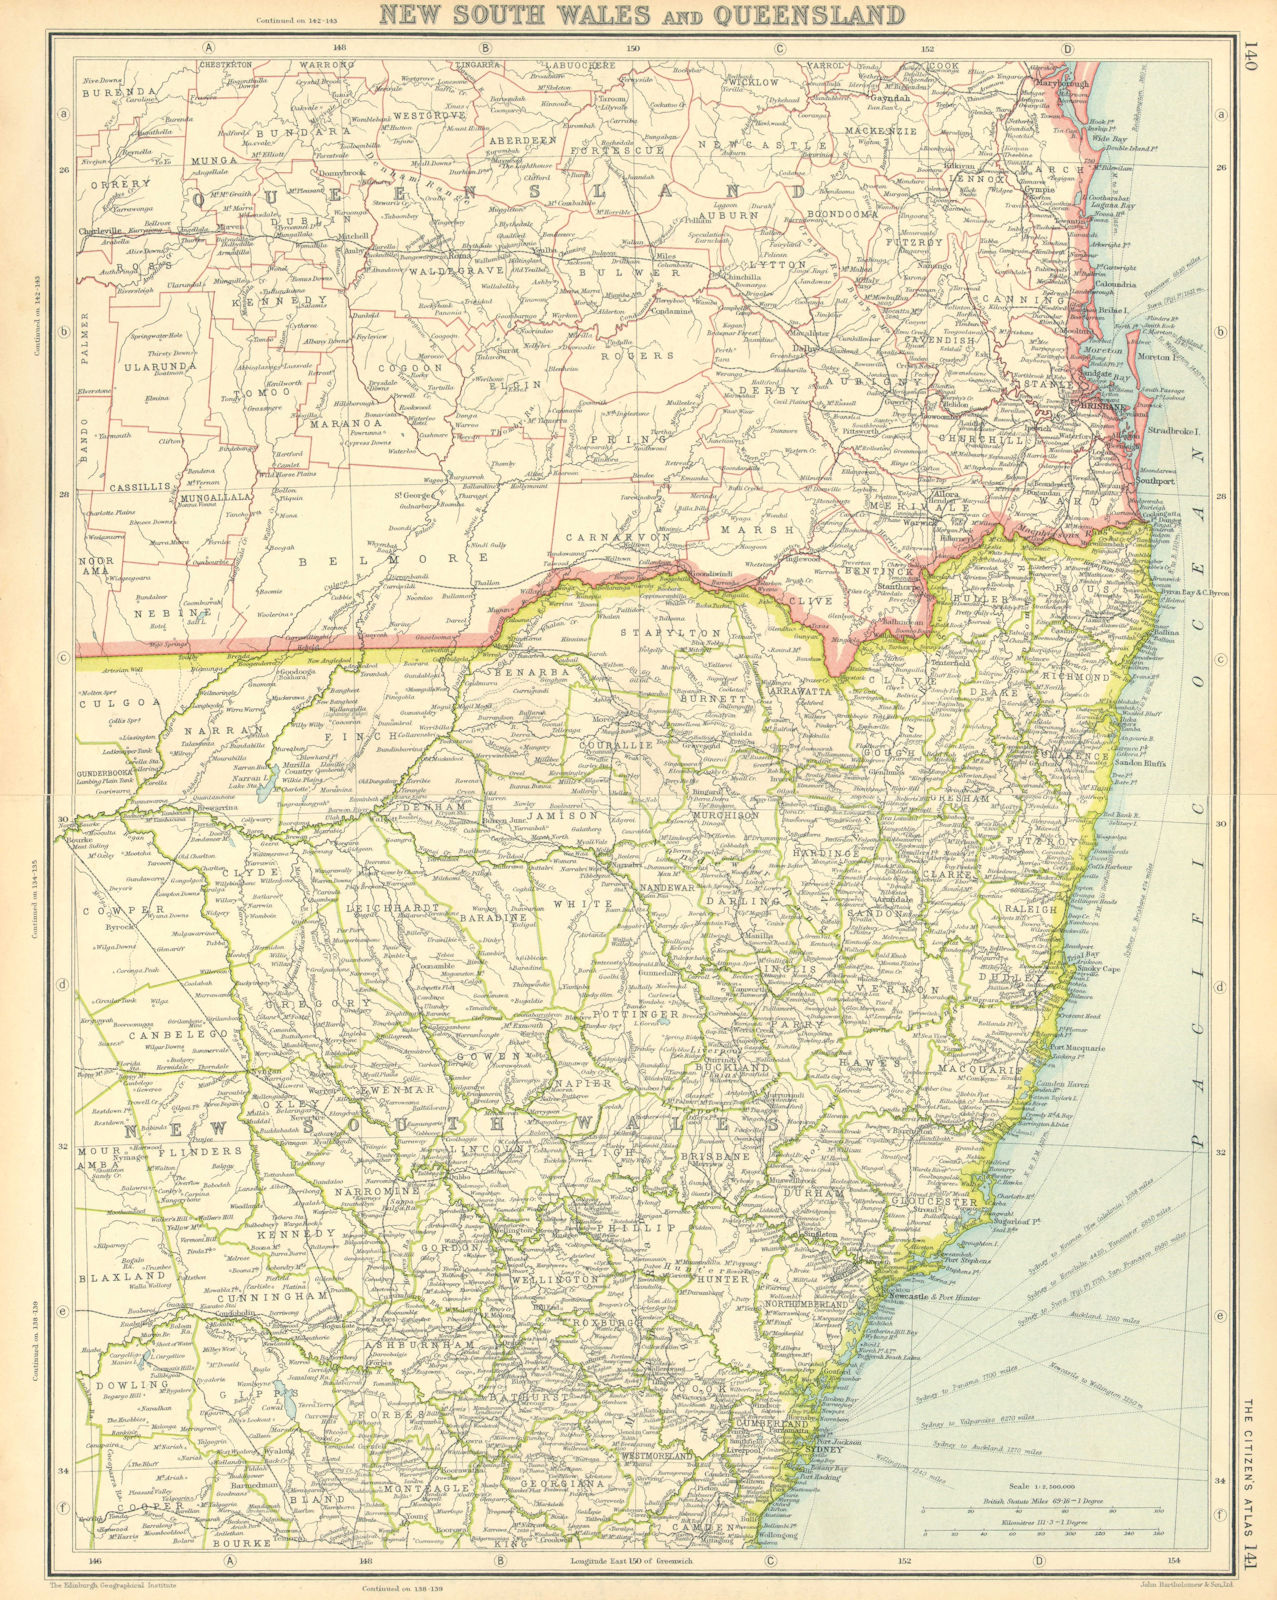 AUSTRALIA EAST COAST. New South Wales and Queensland. Sydney Brisbane 1924 map